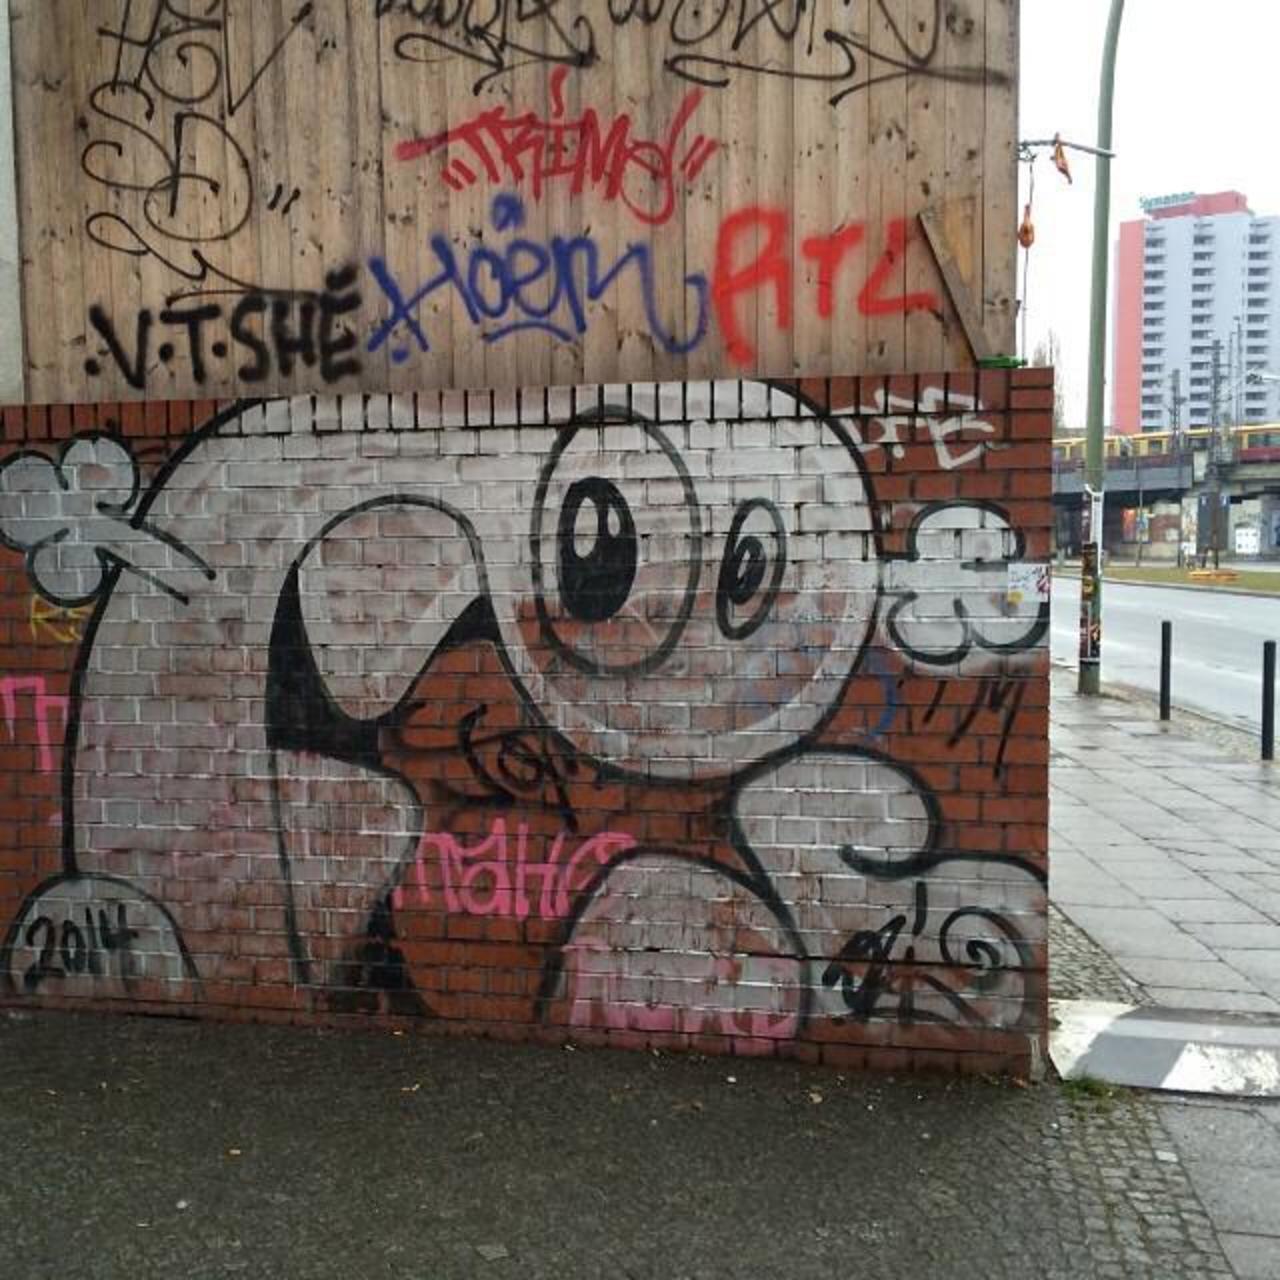 #Berlin #Allemagne #streetart #street #art #urbanart #urbantag #graffiti #streetartberlin by becombegeek http://t.co/avfIhamxb9